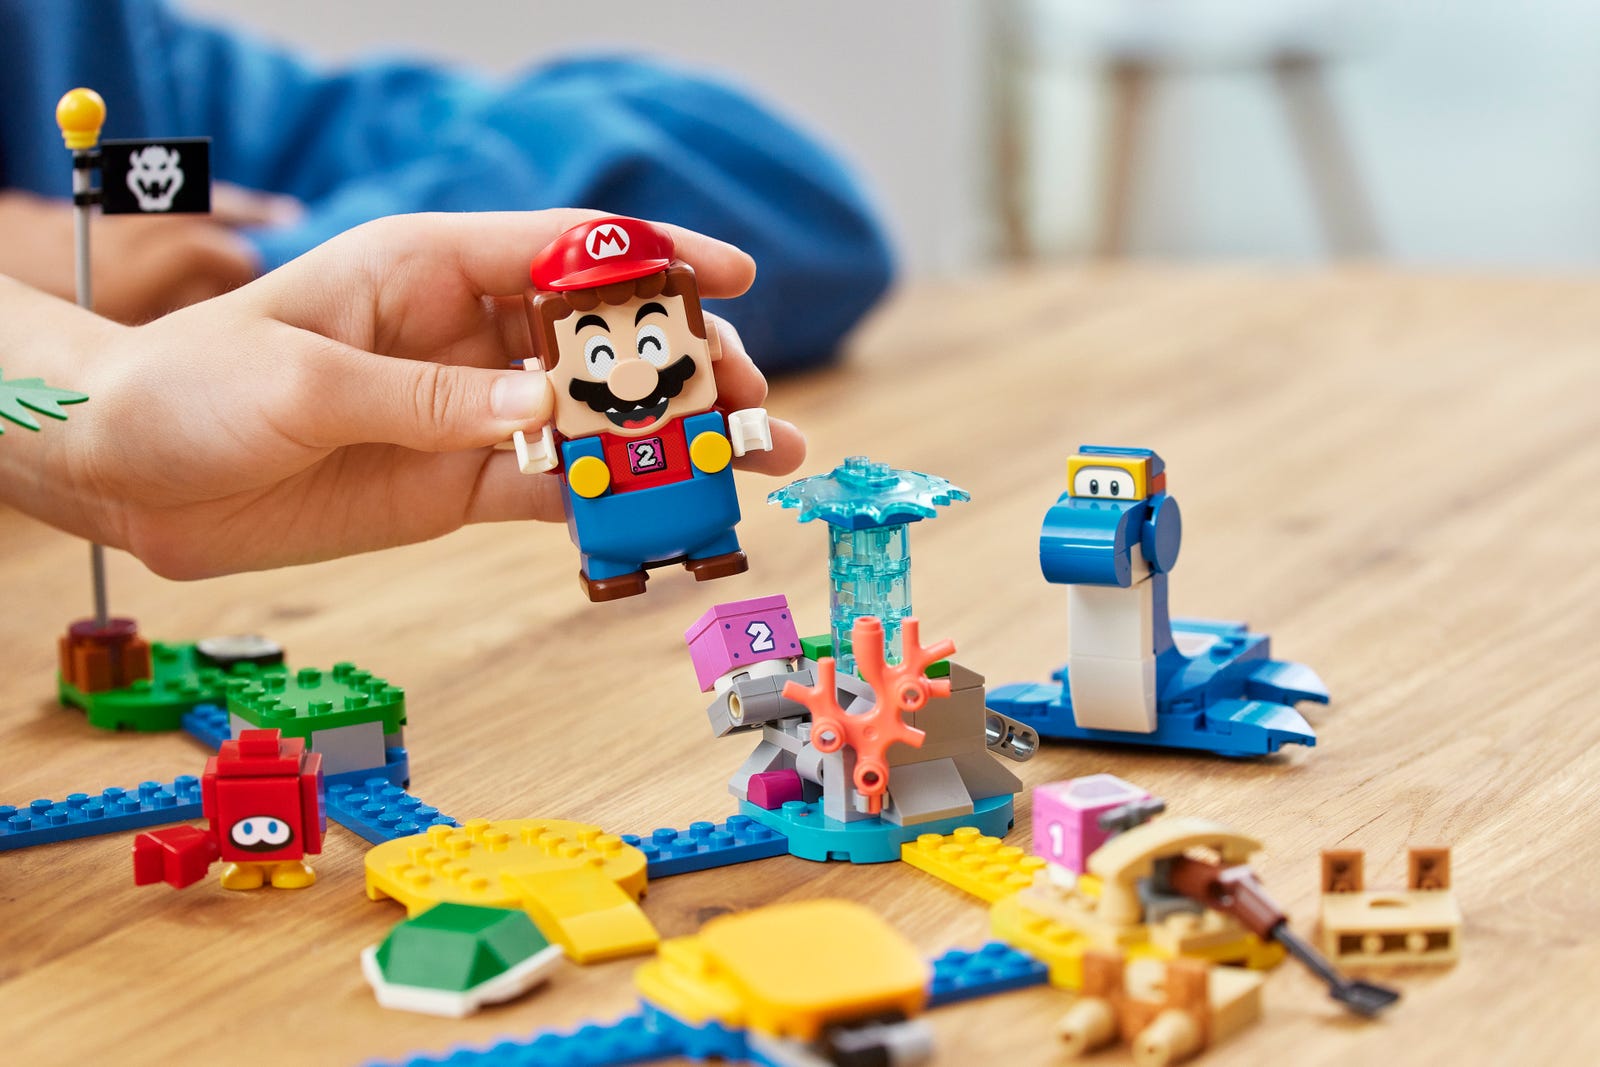 LEGO Super Mario Dorries Beachfront Expansion Set 71398